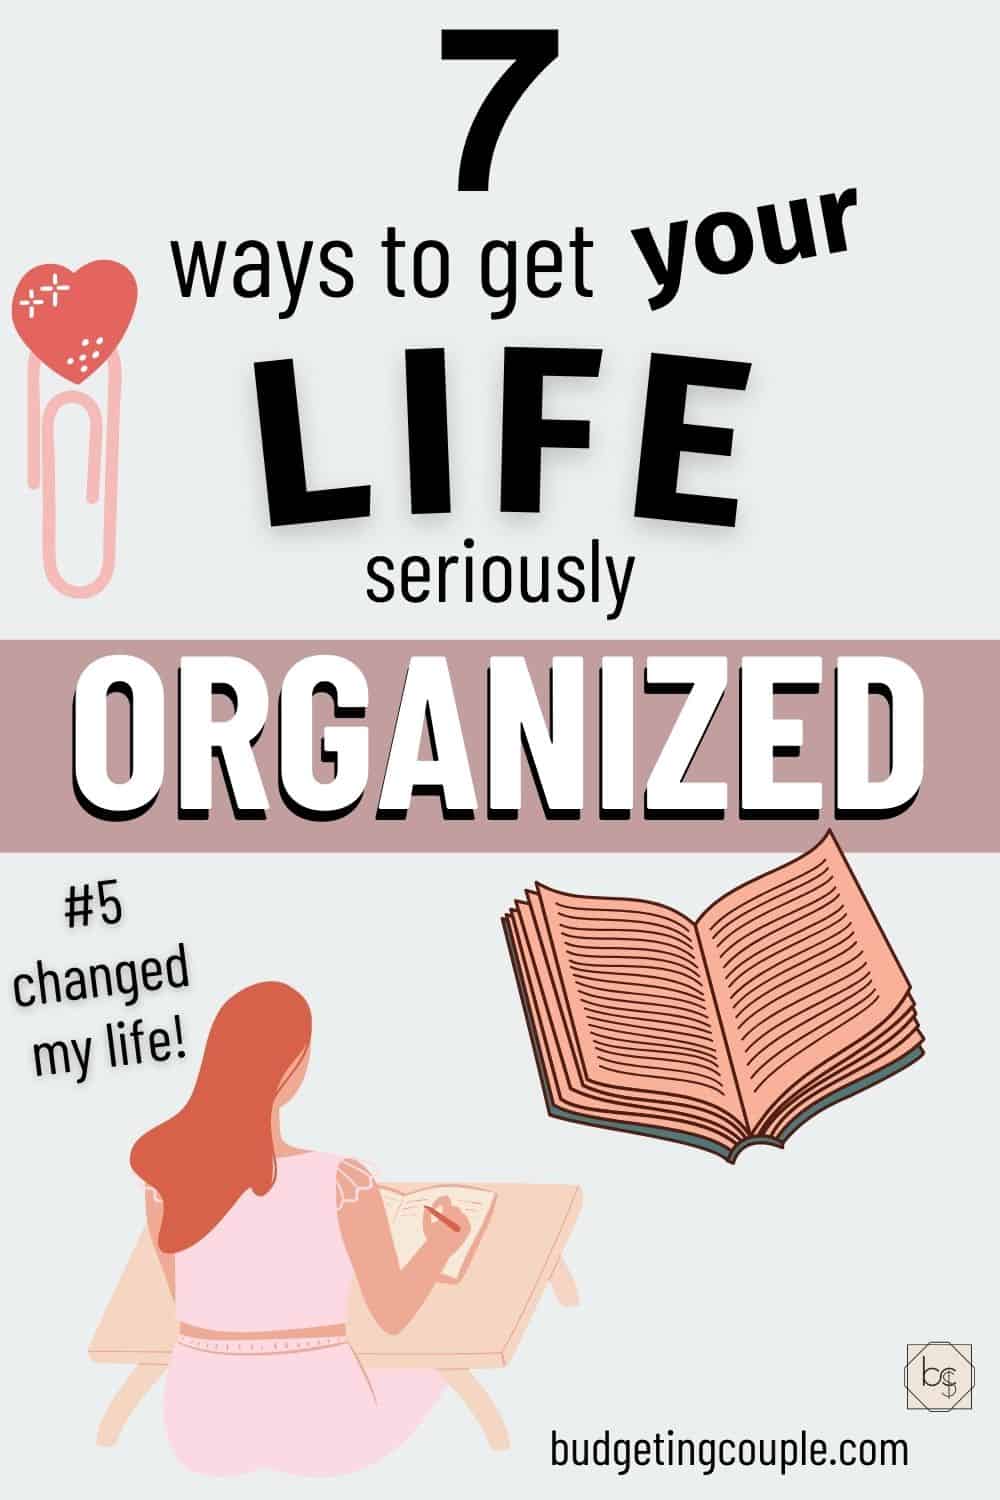 Life organized